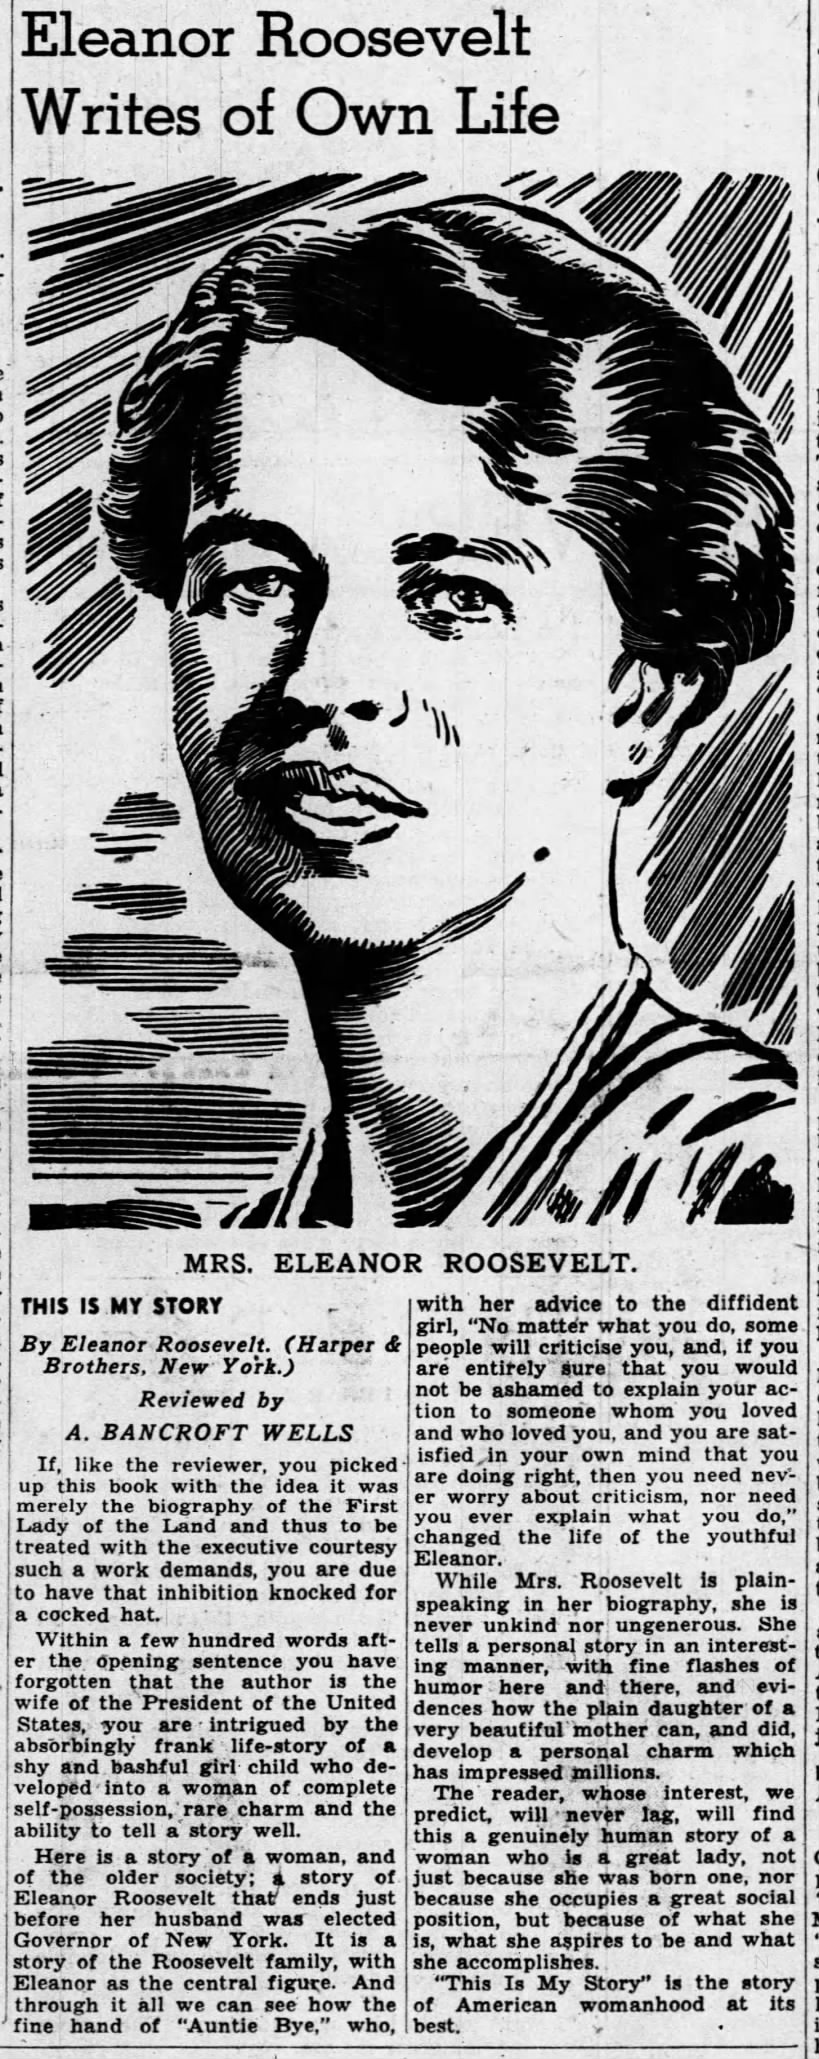 Eleanor Roosevelt Writes of Own Life